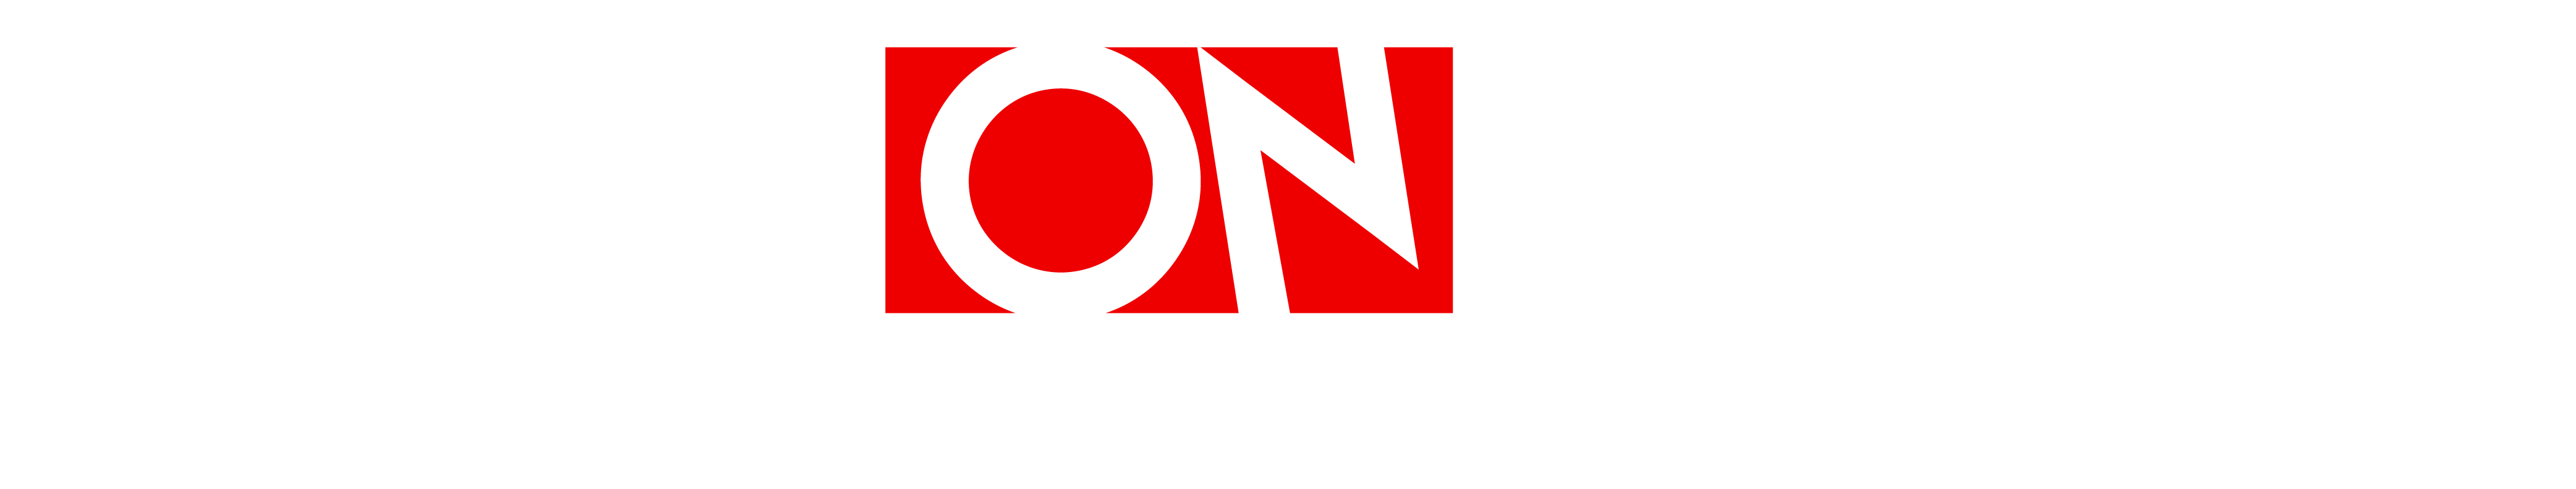 Cirebon Media